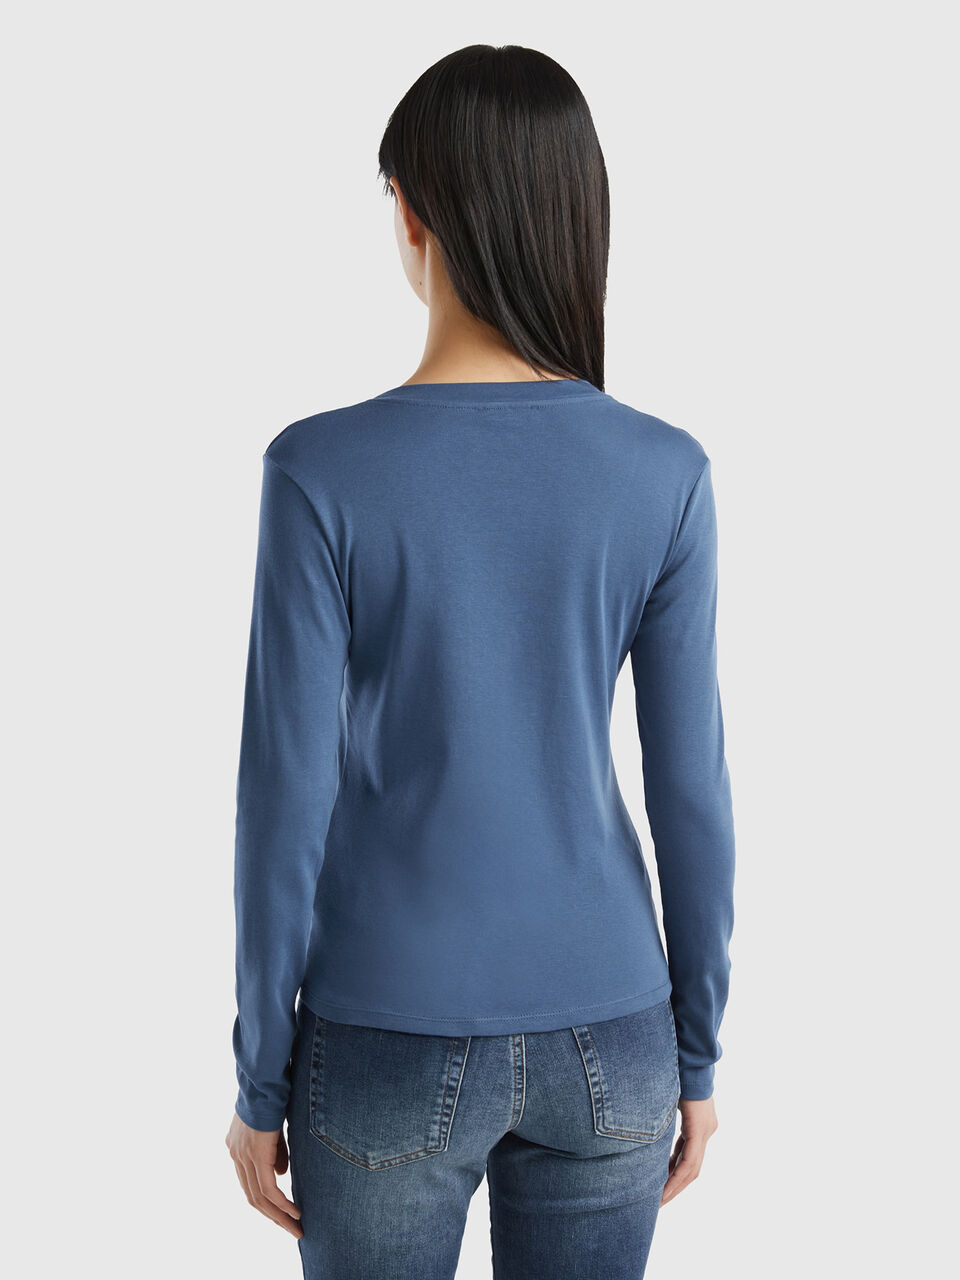 | t-shirt Force sleeve Blue Air cotton pure Benetton Long -